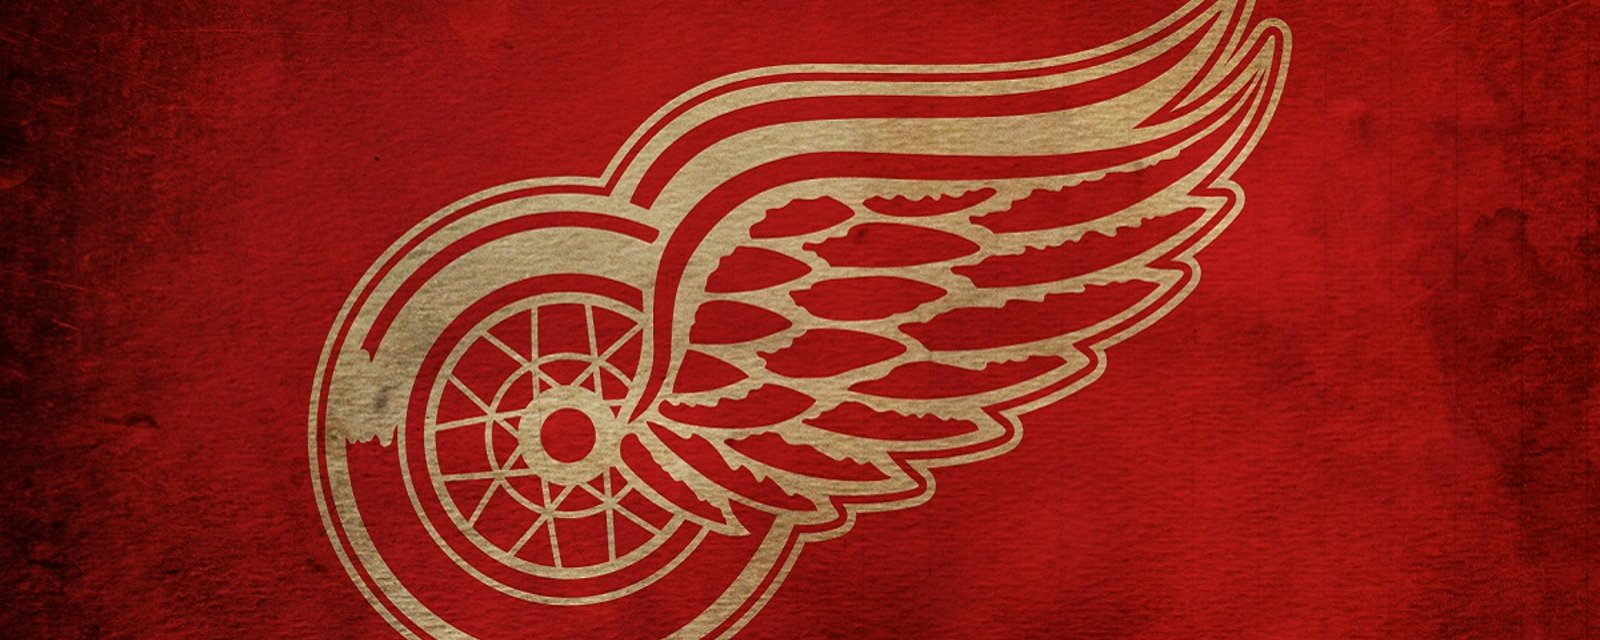 Breaking: Red Wings veteran has announced his retirement!